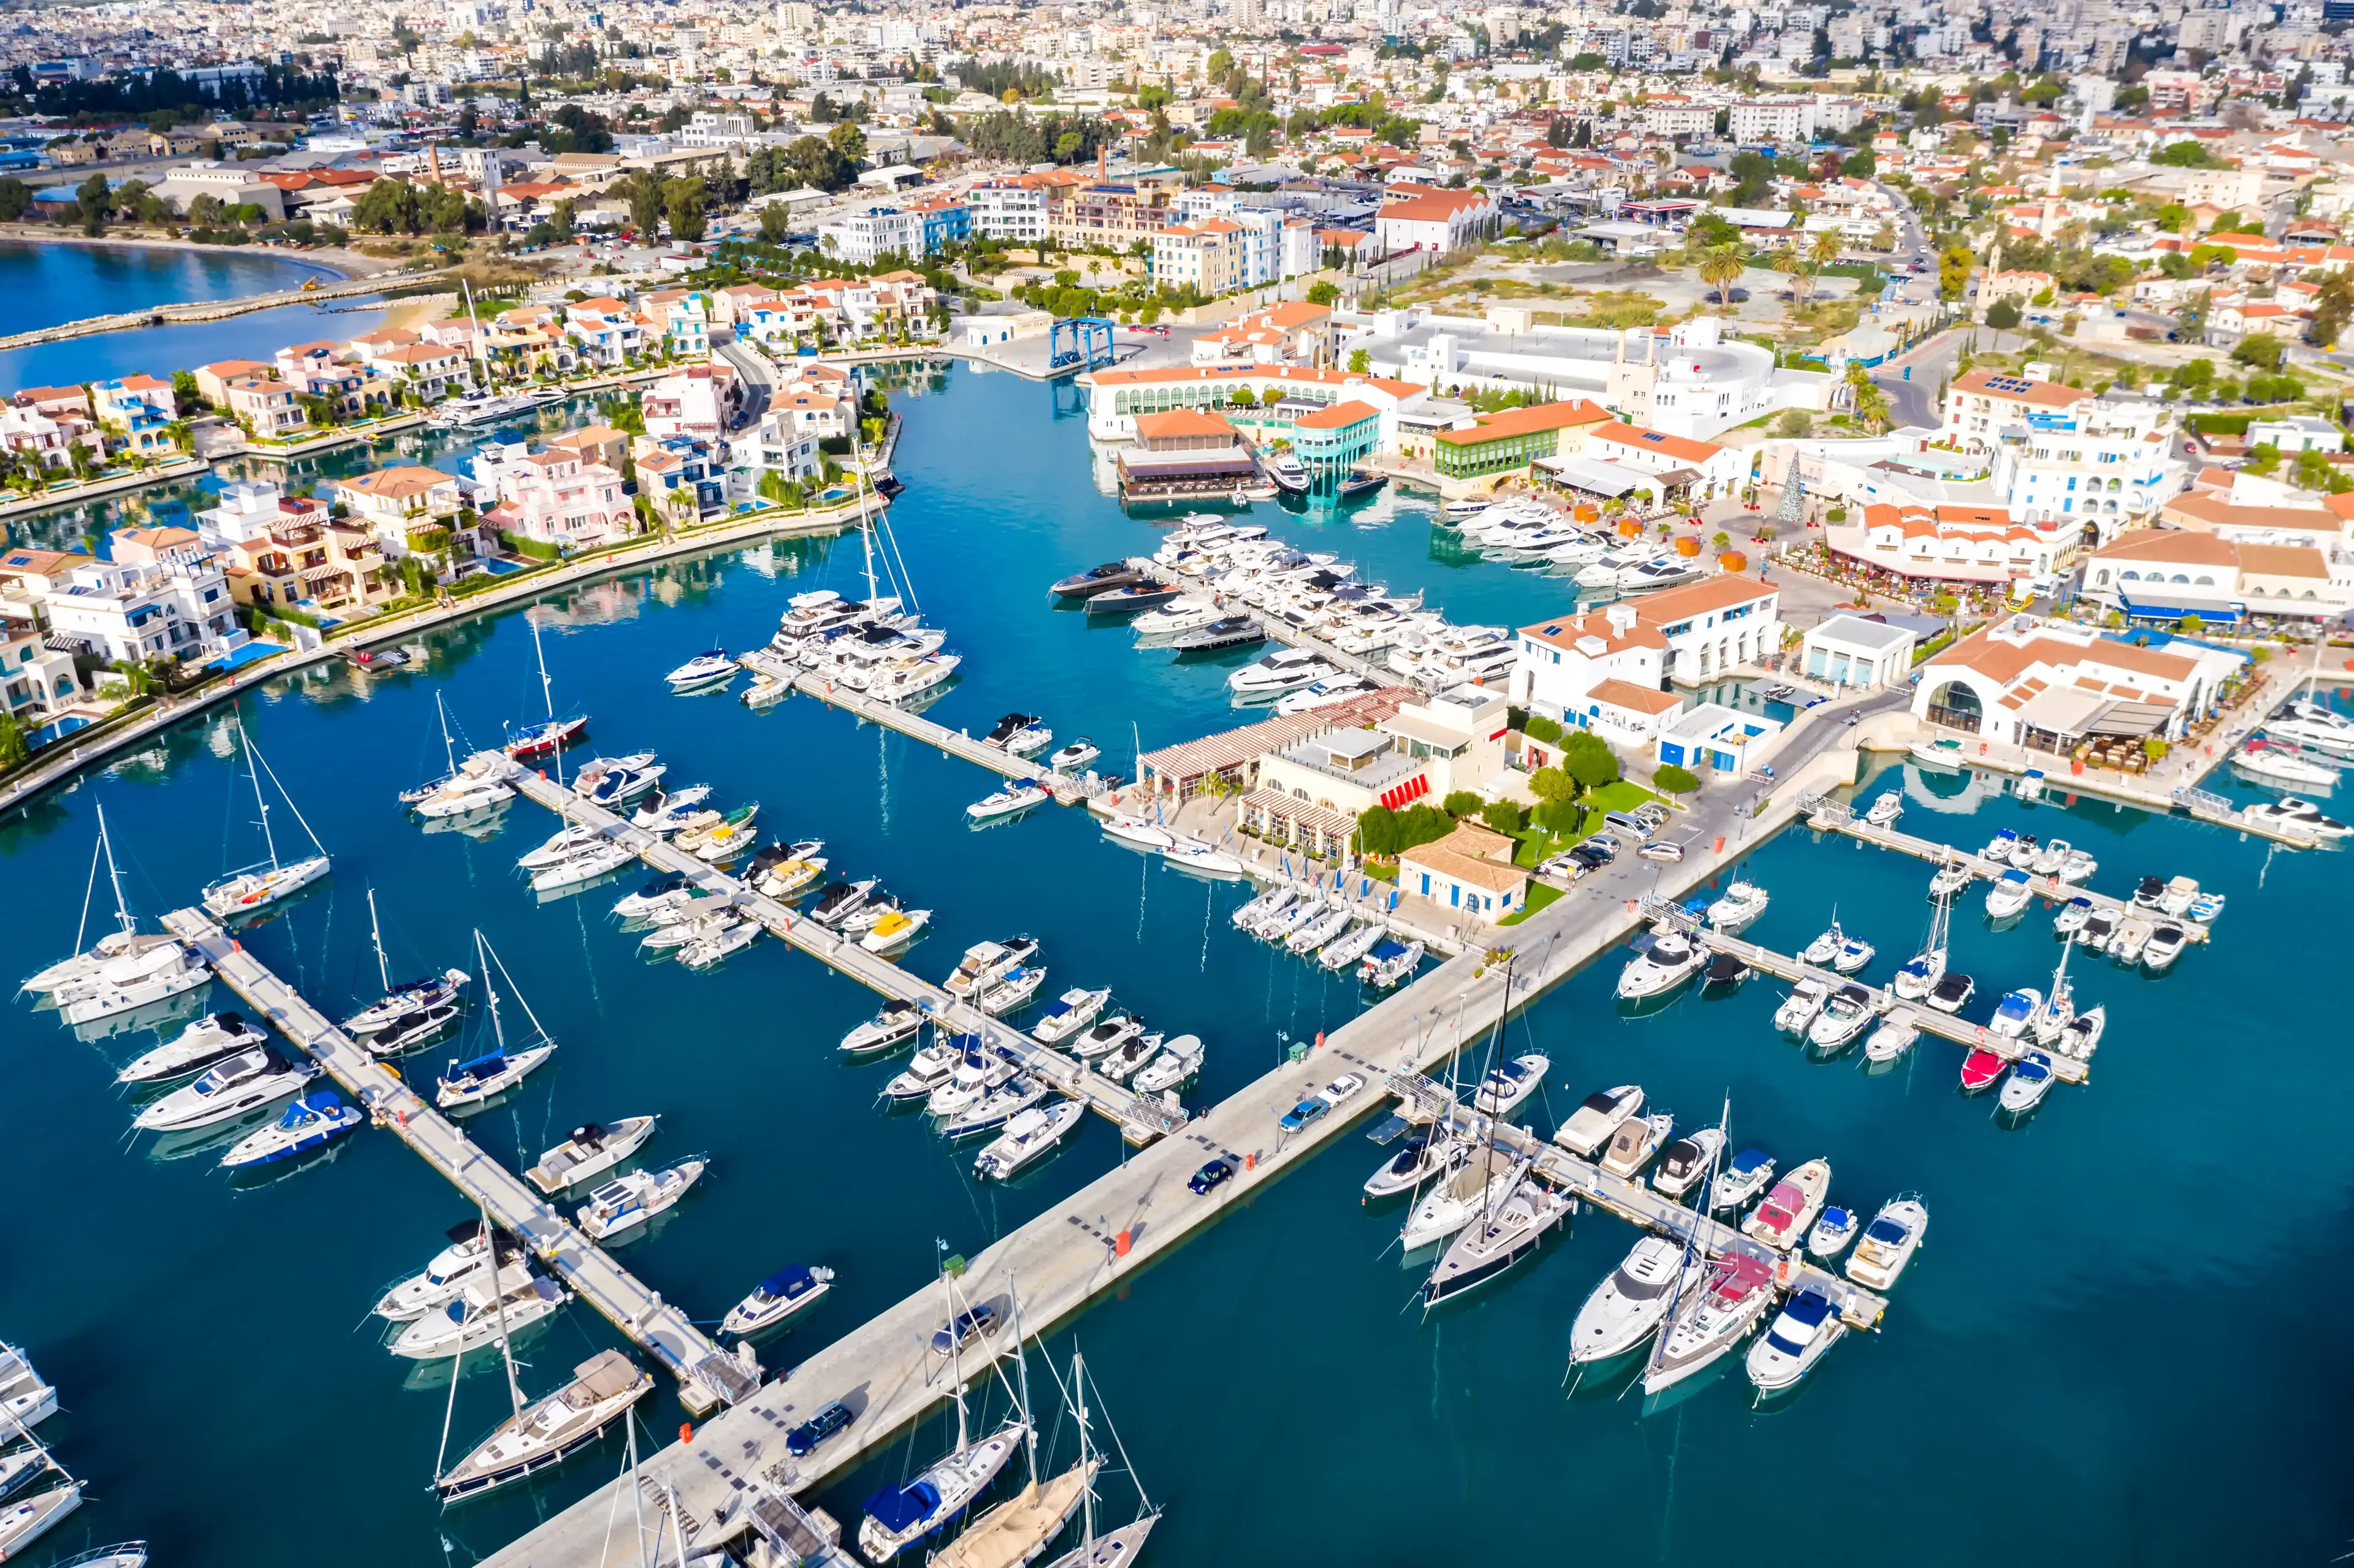 Aerial drone view of Limassol marina. Cyprus